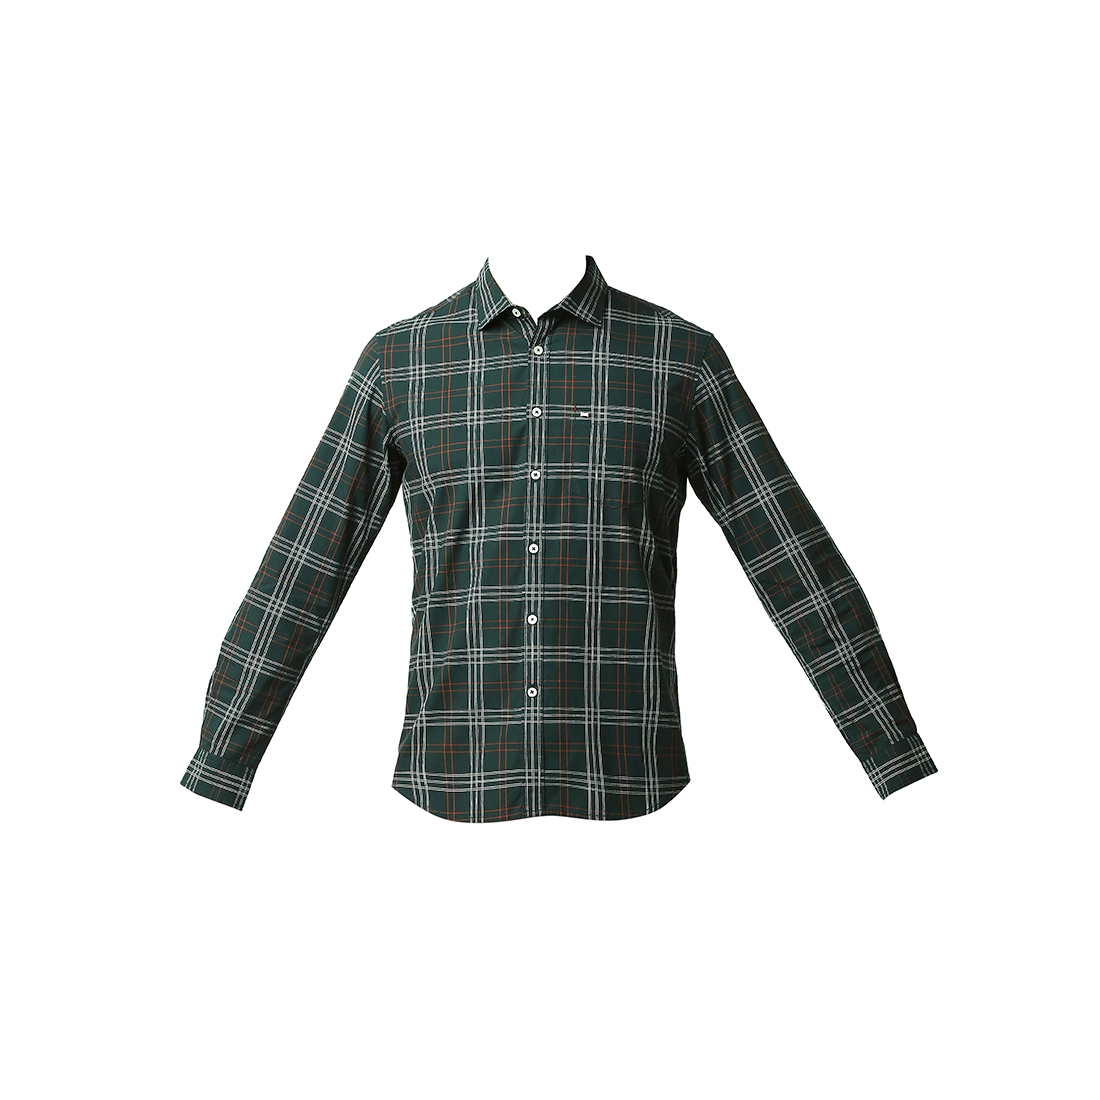 Basics | Men's Green Cotton Solid Casual Shirt 5